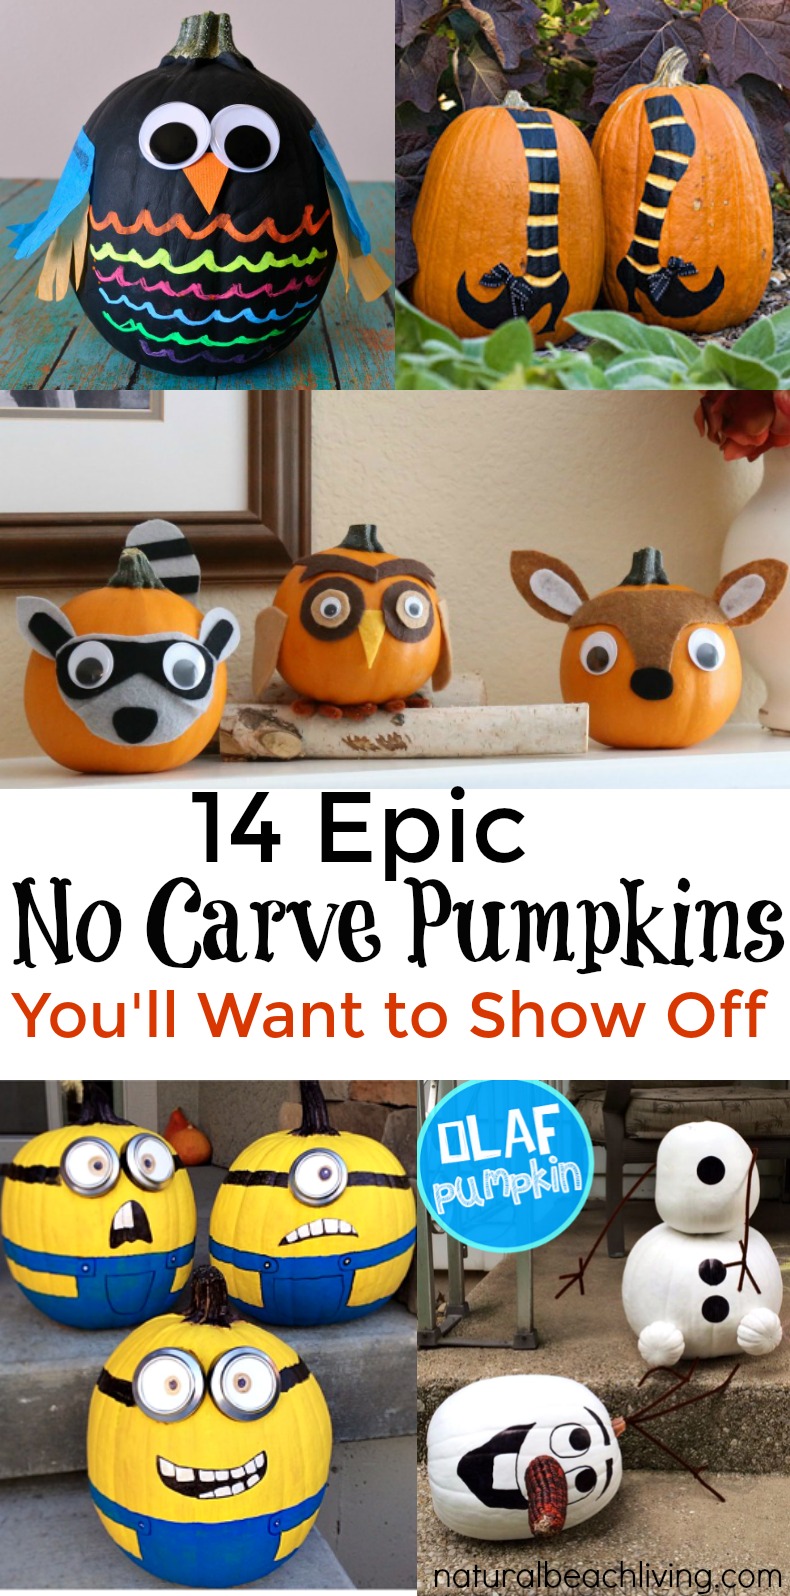 14 Epic No Carve Pumpkins You’ll Want to Show Off